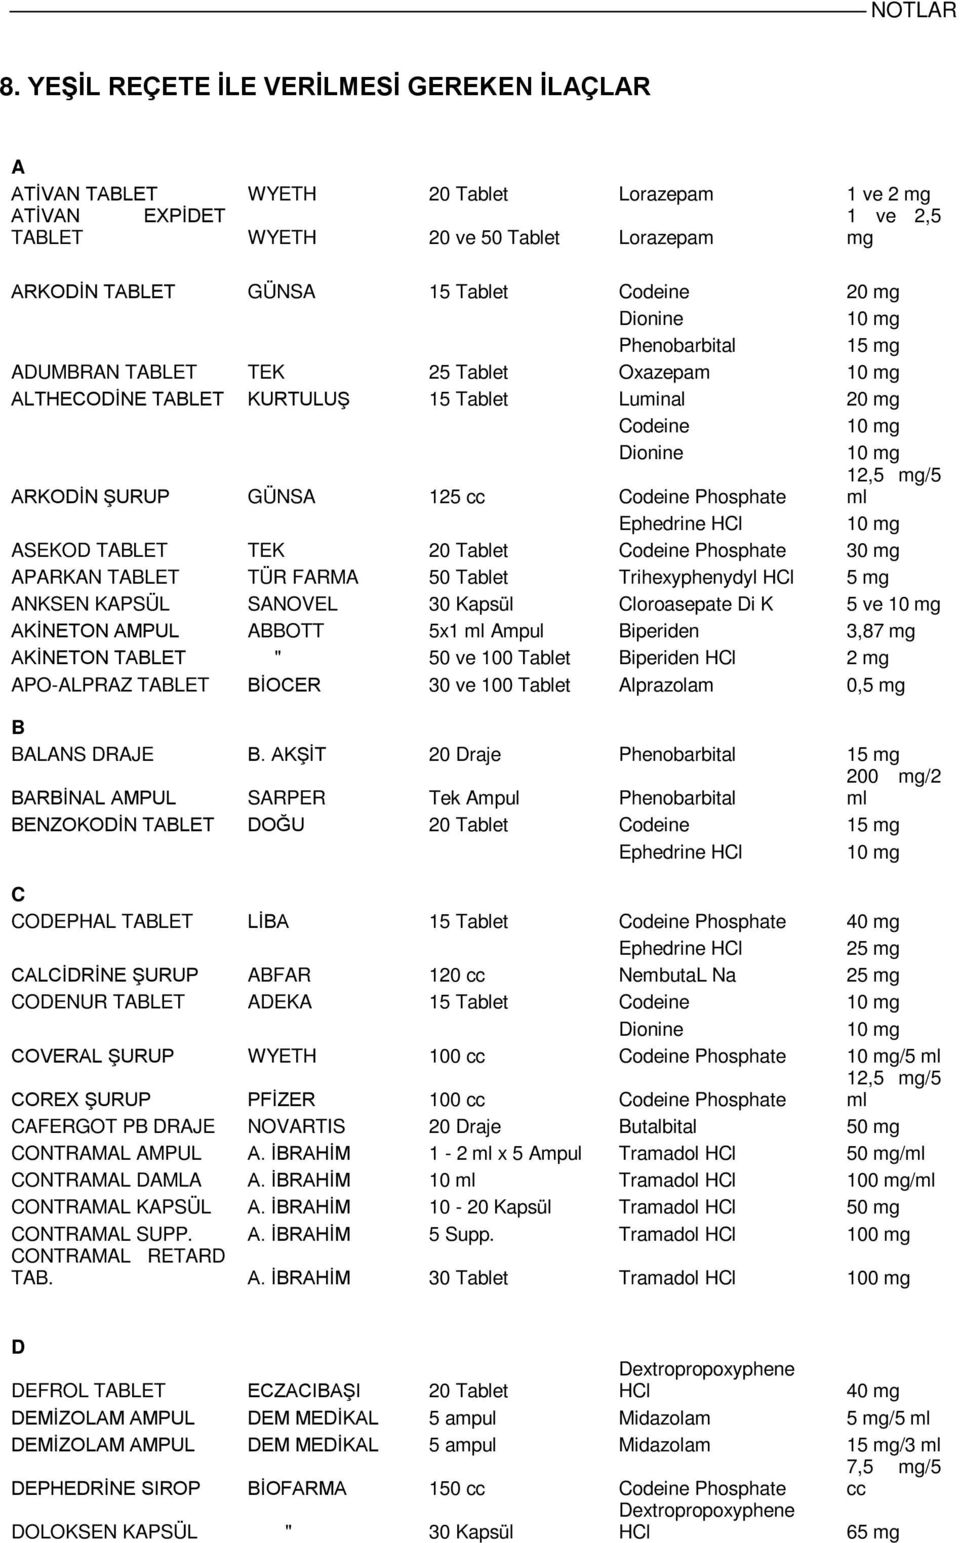 Ephedrine HCl ASEKOD TABLET TEK 20 Tablet Codeine Phosphate 30 mg APARKAN TABLET TÜR FARMA 50 Tablet Trihexyphenydyl HCl 5 mg ANKSEN KAPSÜL SANOVEL 30 Kapsül Cloroasepate Di K 5 ve AKİNETON AMPUL